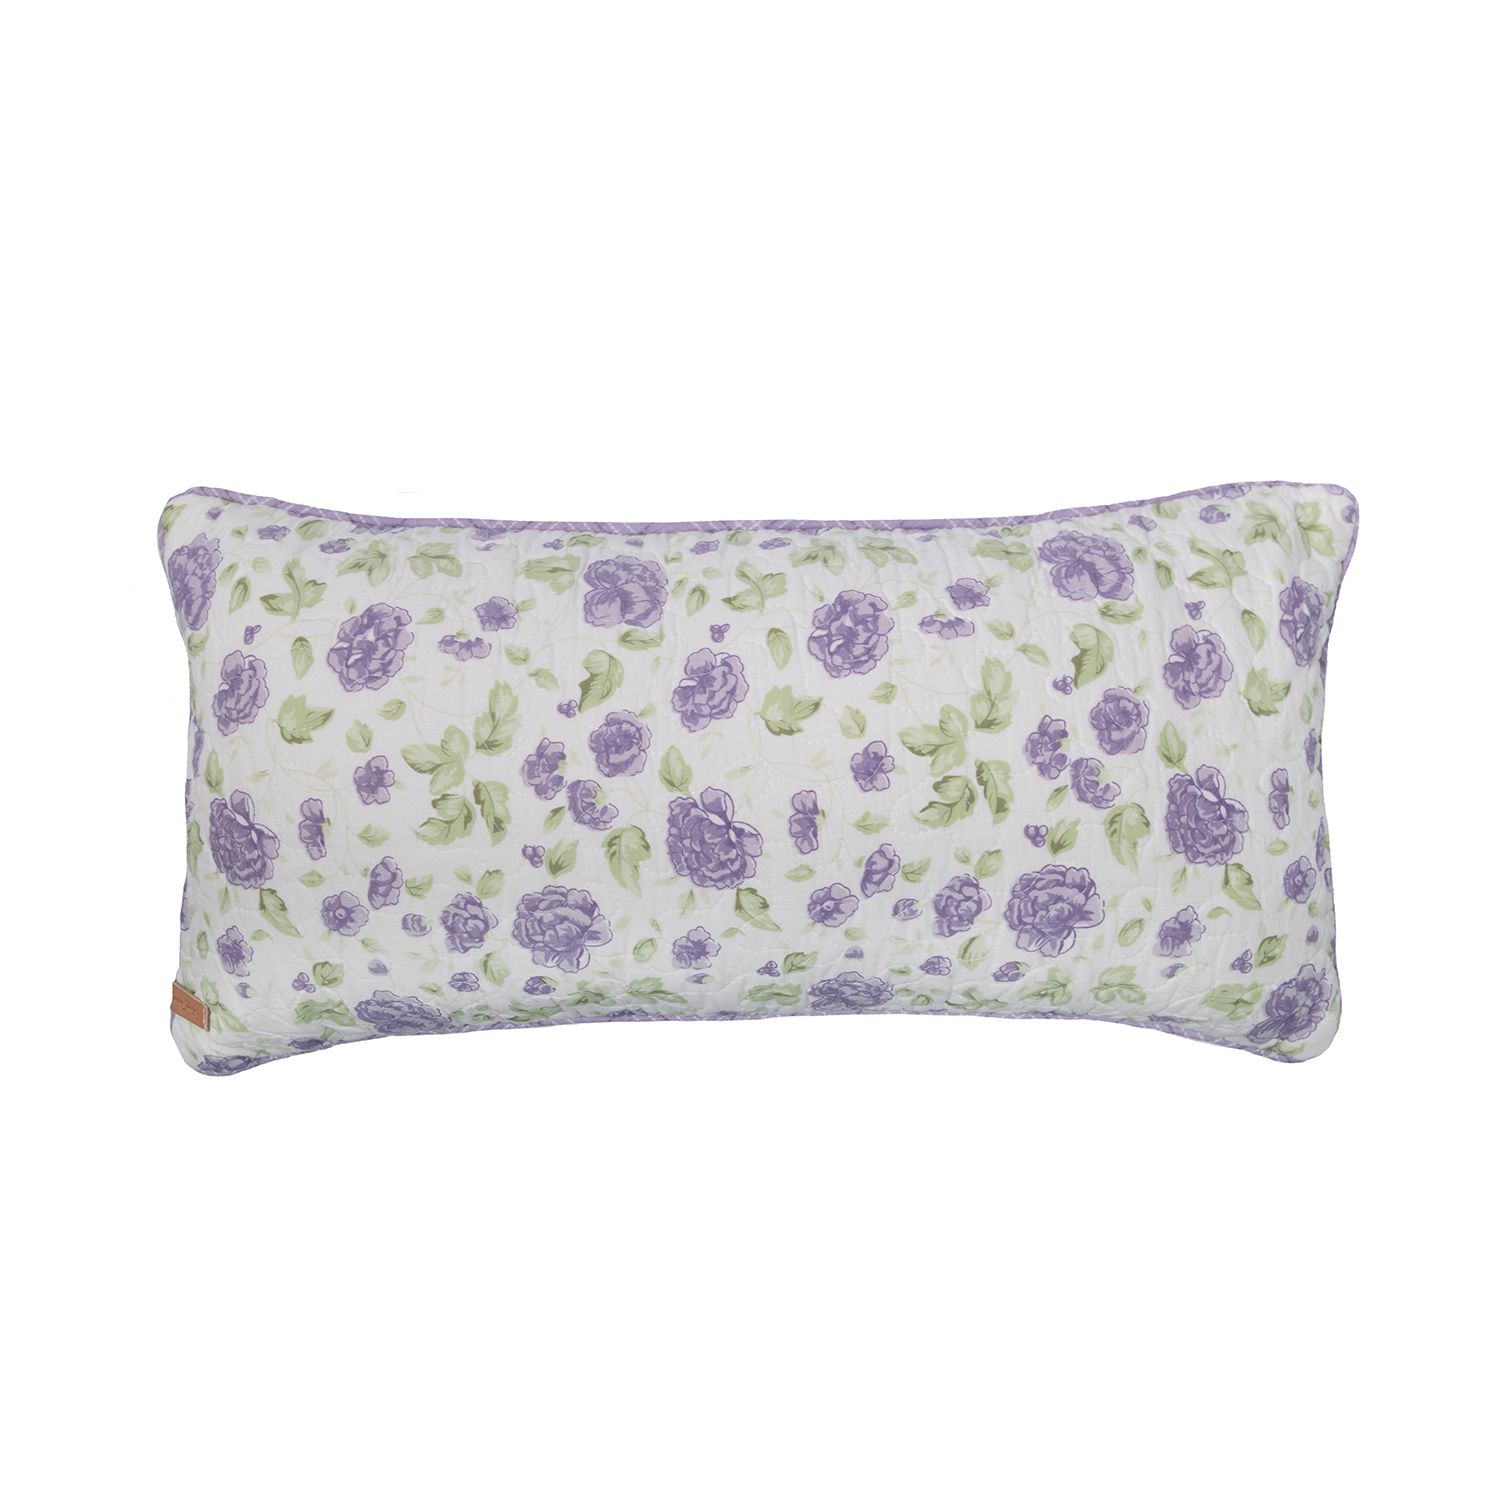 Image for Donna Sharp Lavender Rose Oblong Throw Pillow at Kohl's.